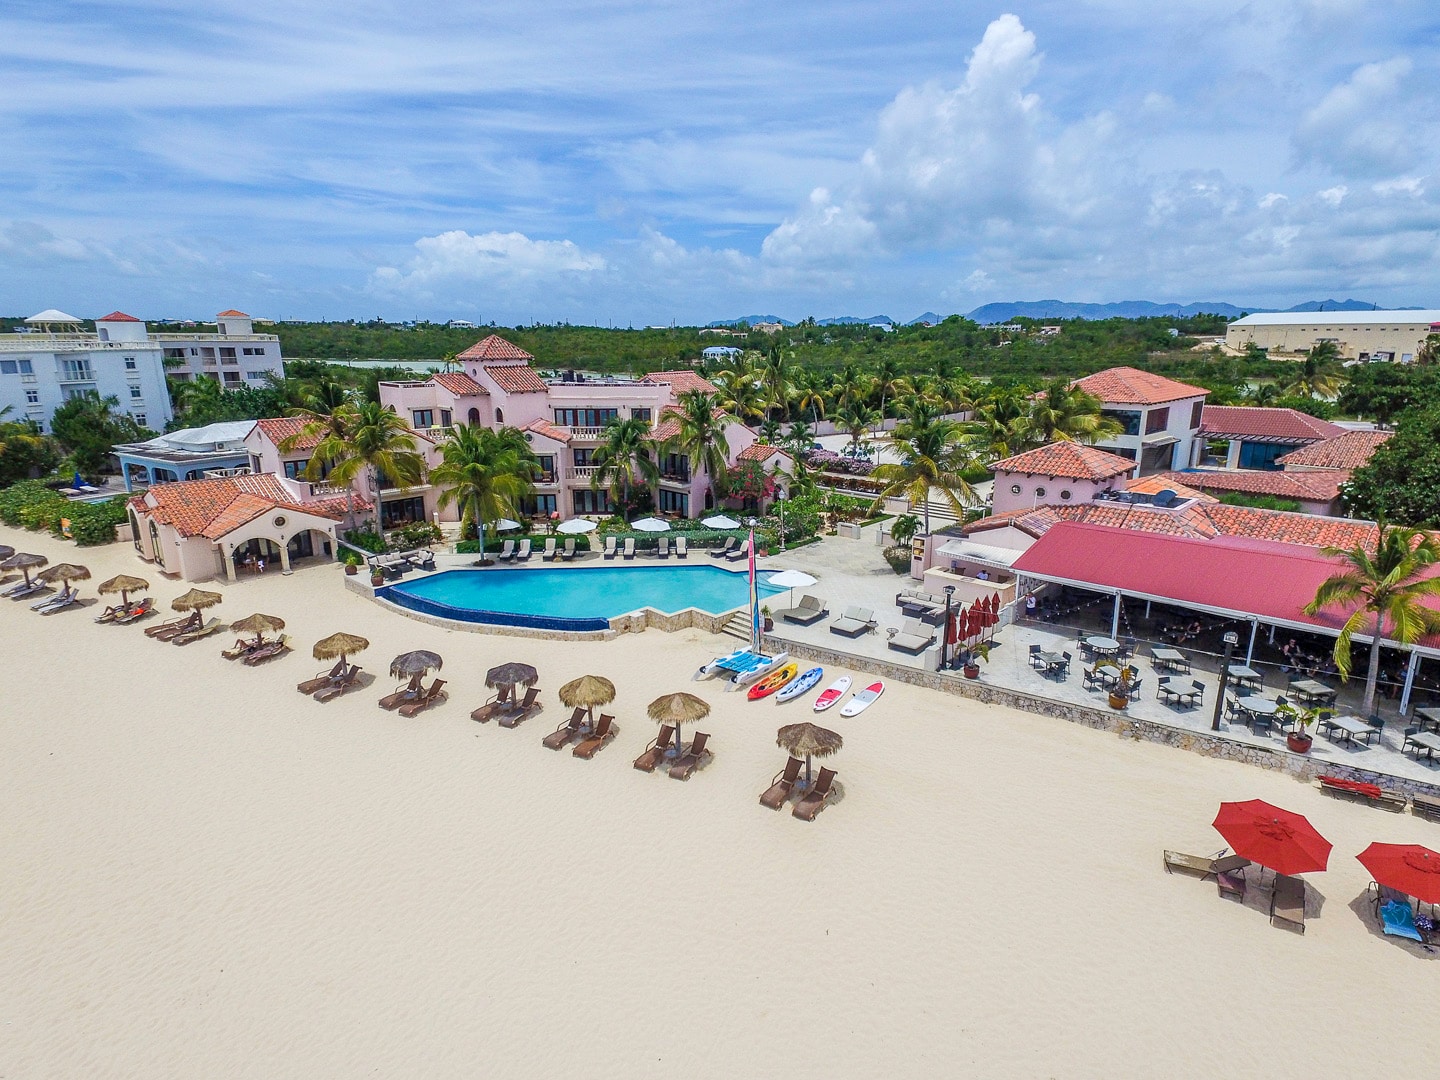 Black Friday Cyber Monday Travel Deals: Frangipani Beach Resort